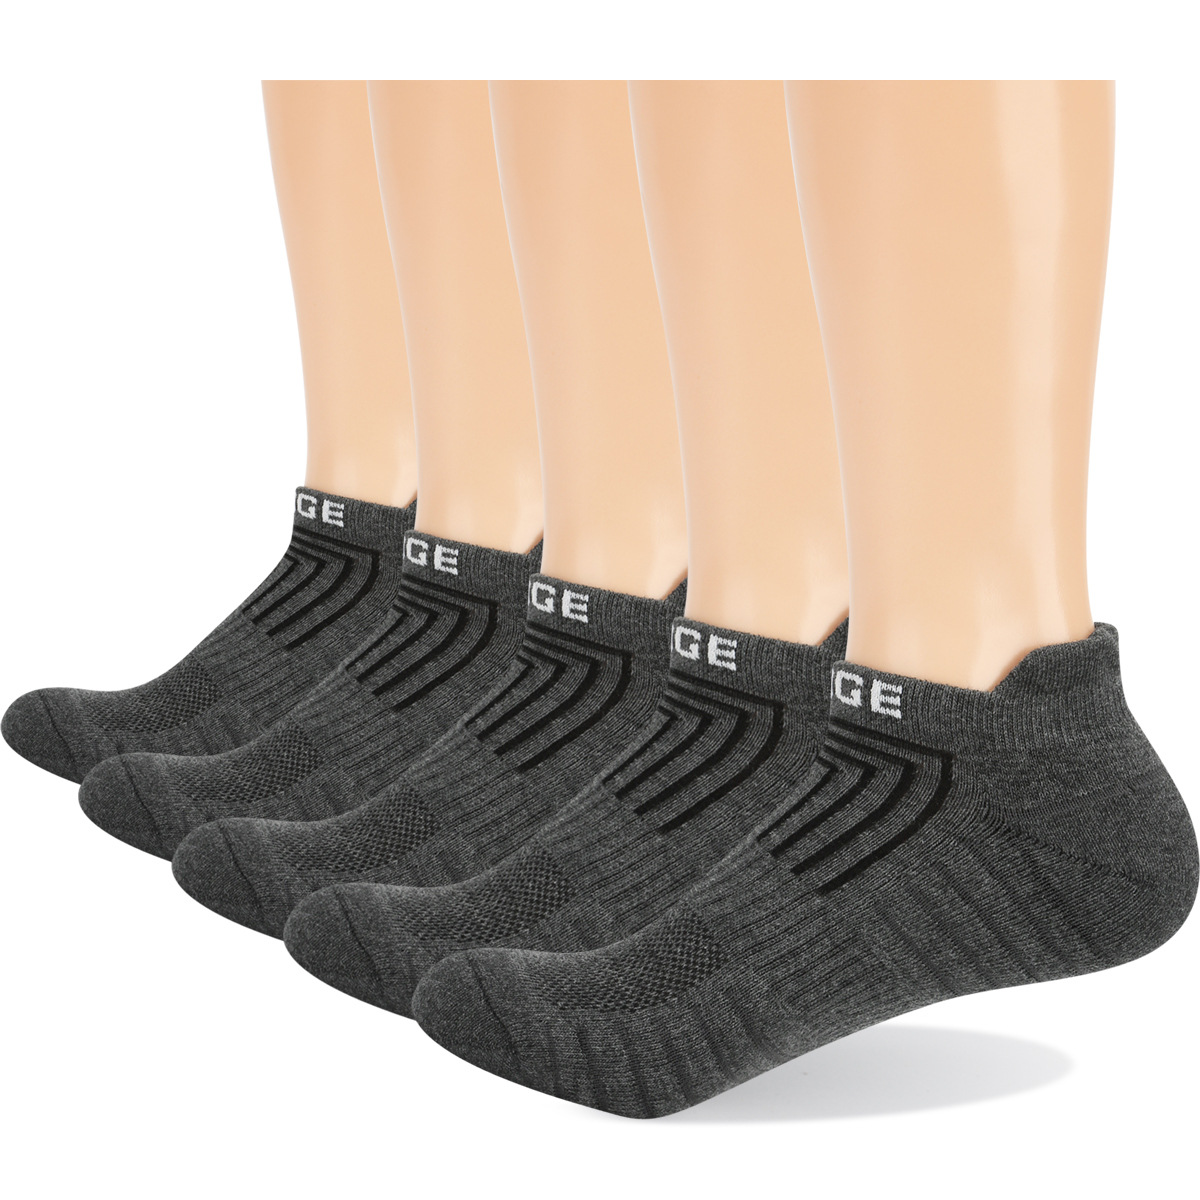 YUEDGE 10 Pairs Outdoor Sports Socks Cotton Towel Bottom Short Hiking Running Basketball Casual Socks